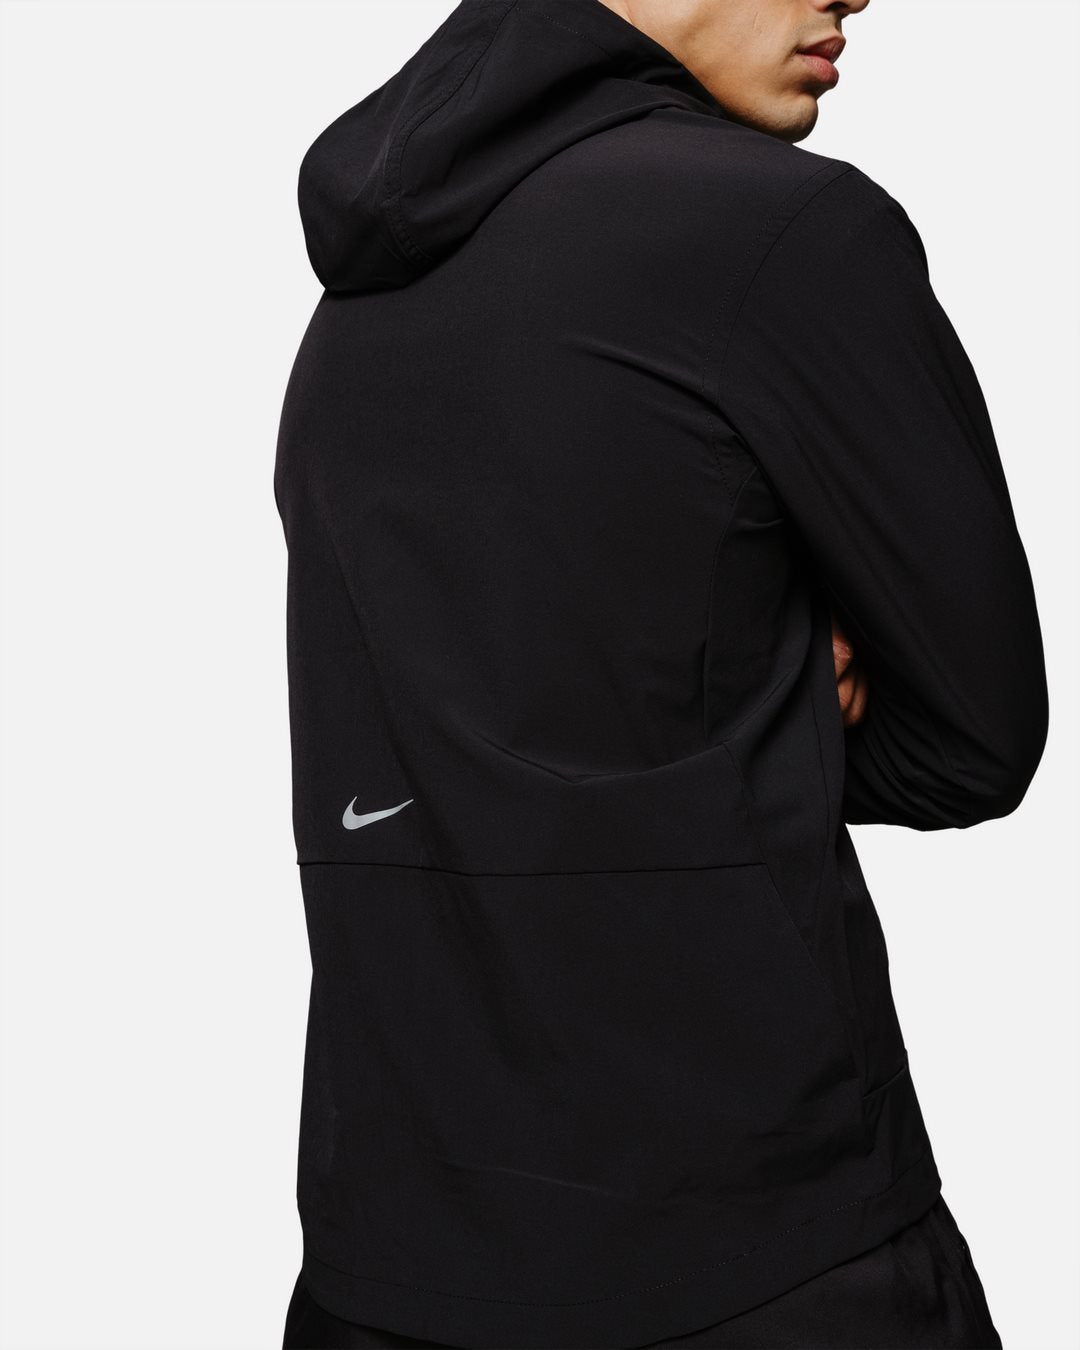 Veste Nike Unlimited - Noir